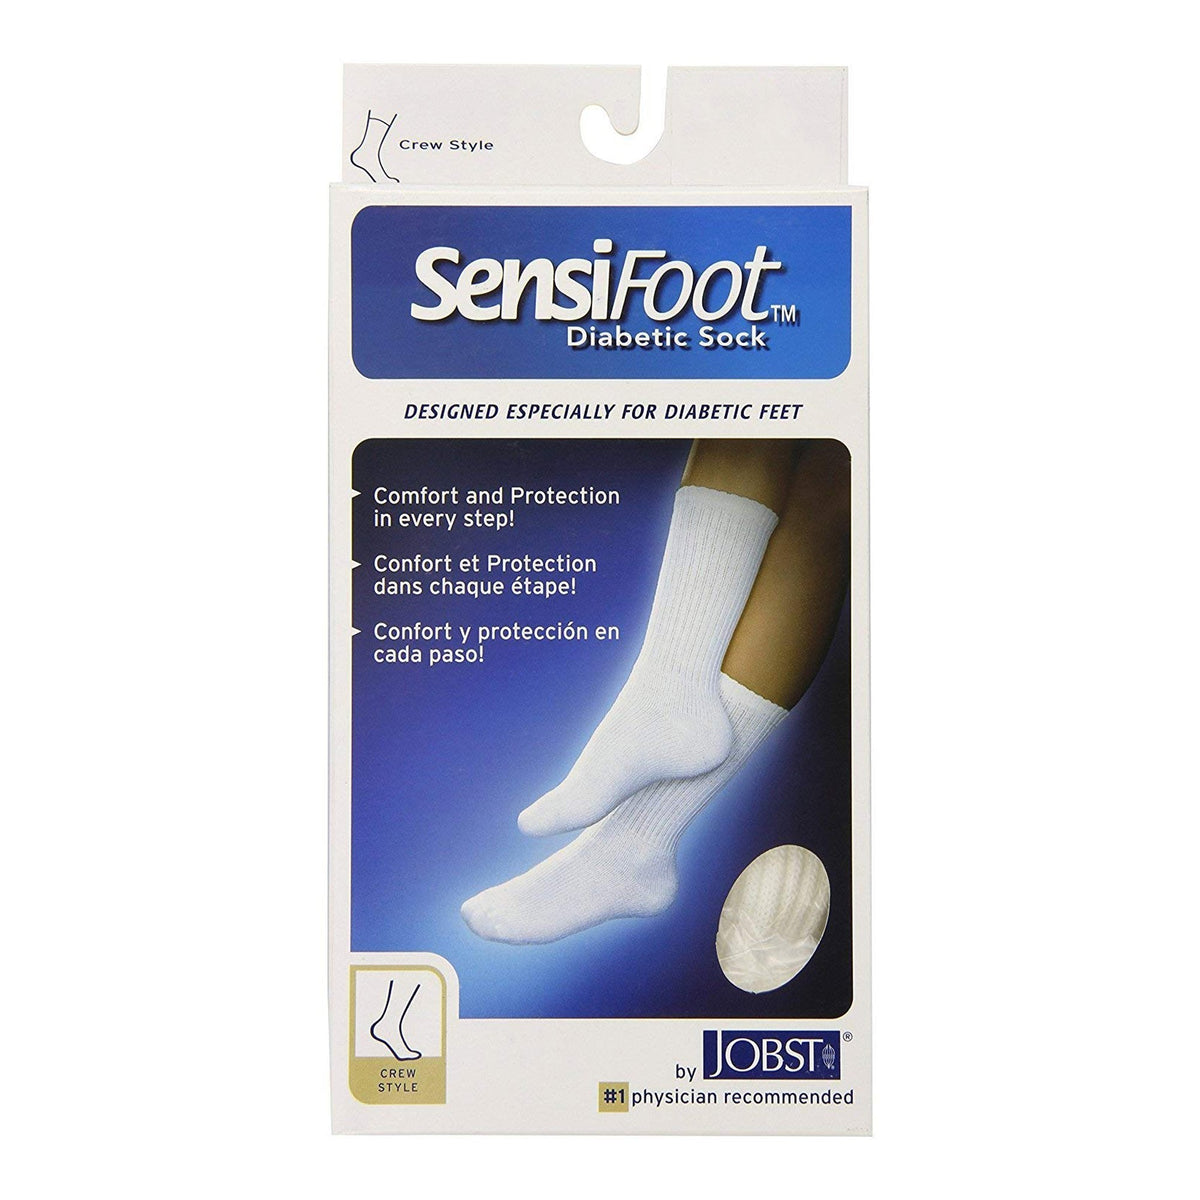 JOBST SensiFoot Contoured Diabetic Sock, Large, Crew, Closed Toe - American Hospital Supply